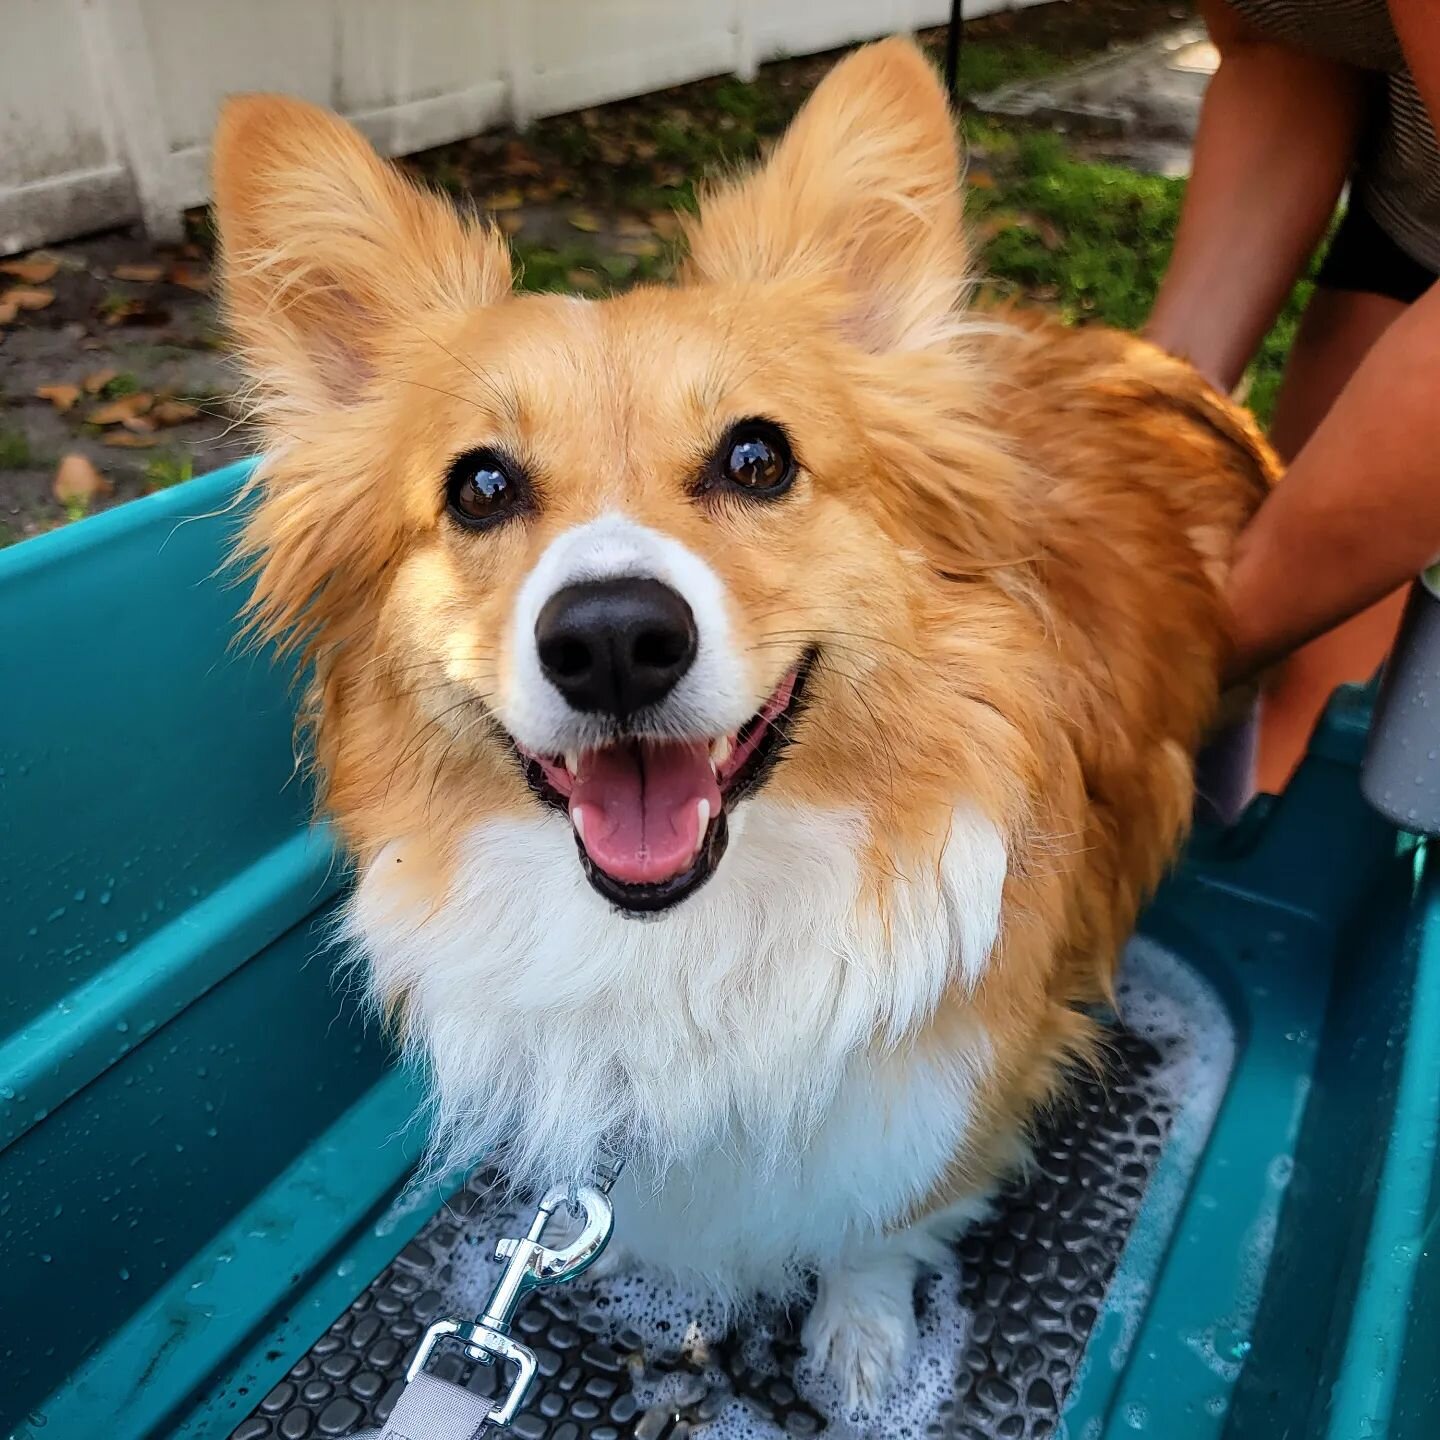 All smiles in the bath. 
.
.
#corgi #allsmiles
.
#pitterpatterpaws3 #p3 #stpetefl #dogwalking #petsitting #smallbusiness #blackowned #morethanjustawalk #loventhemlikeyoulovethem #exercise #dogsofig #fldogs #dogsofdunedin #dogsofstpete #daycare #newfr